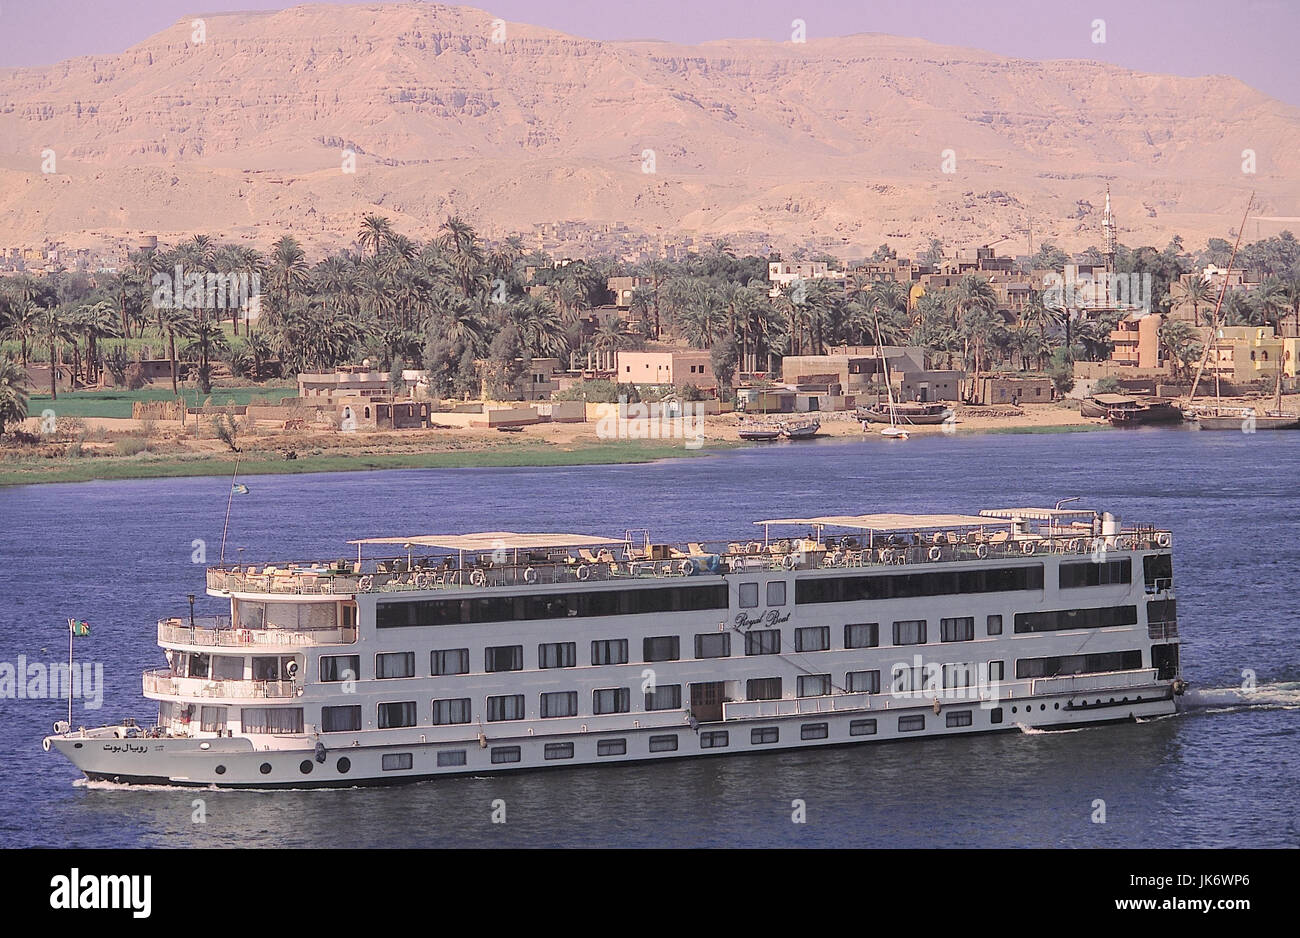 Ägypten, Luxor, West Bank Hills, Nil, Schiff  Fluss, Passagierschiff, Ausflugsschiff, Tourismus,  Gebirge, Berglandschaft Stock Photo